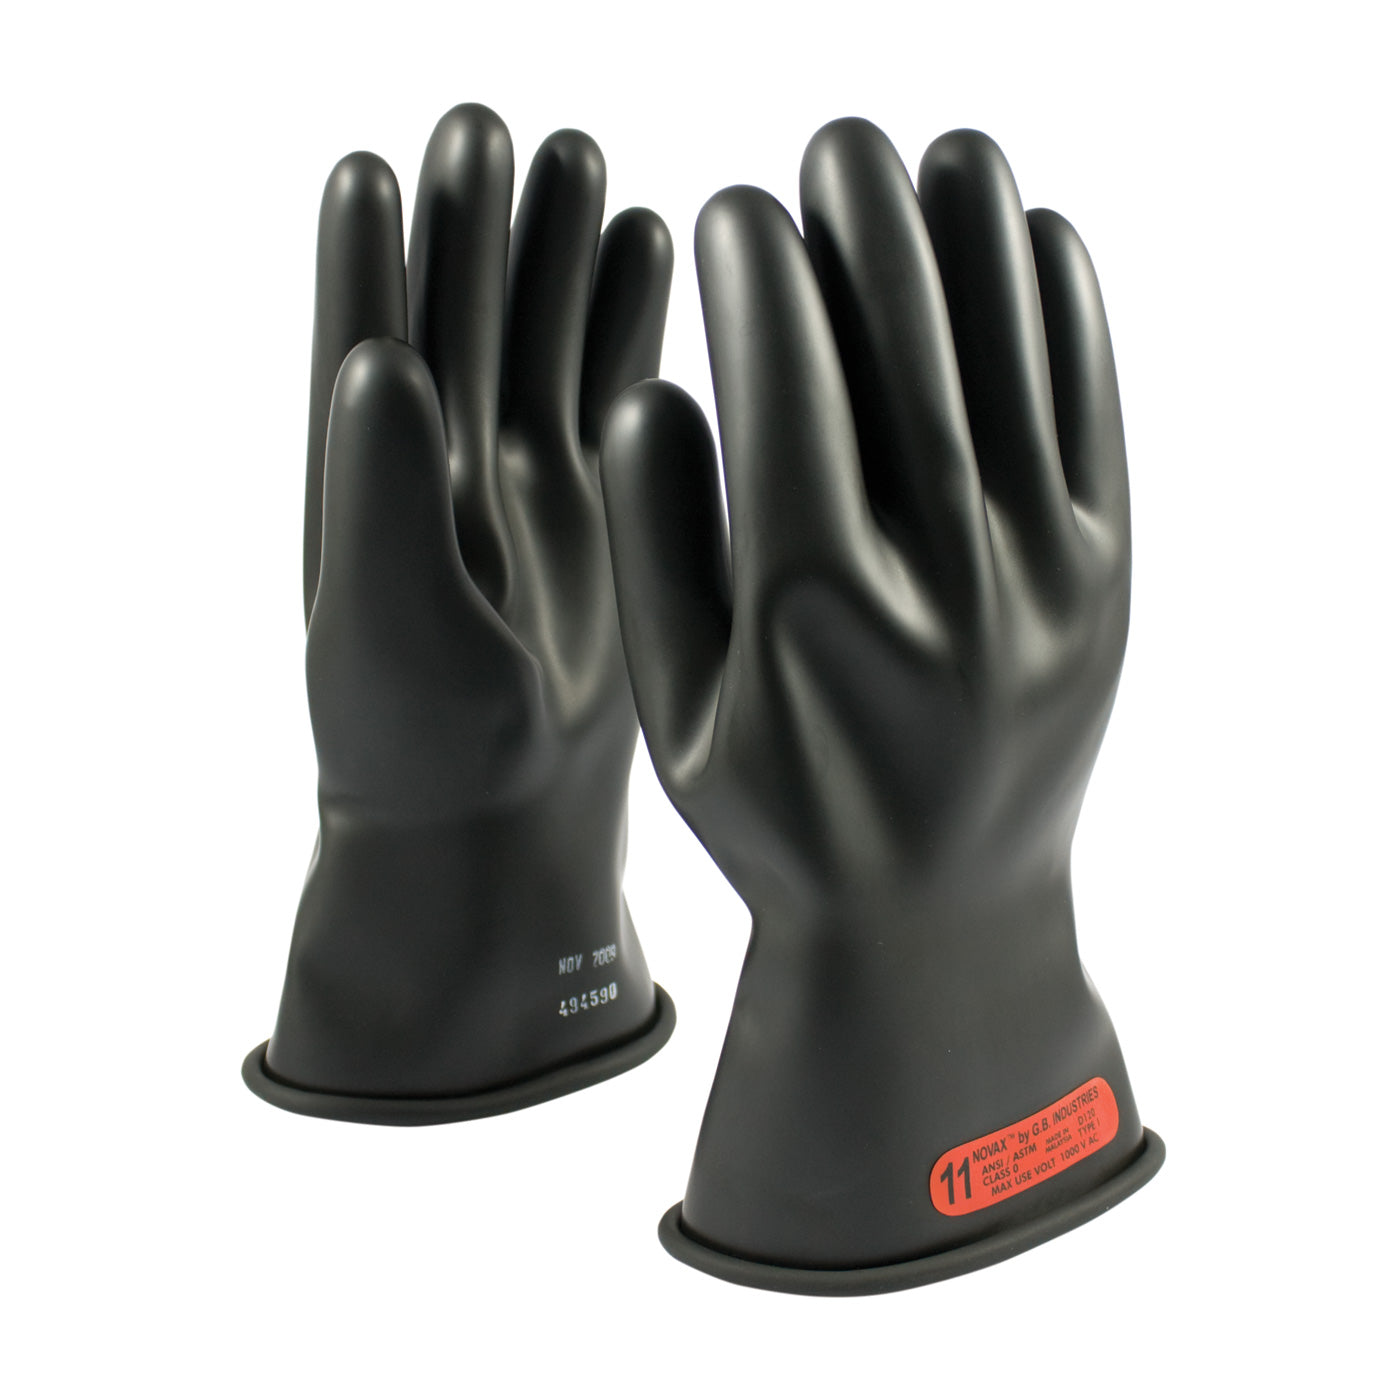 PIP Novax 150-0-11 Class 0 Rubber Insulating Gloves, 1 Pair